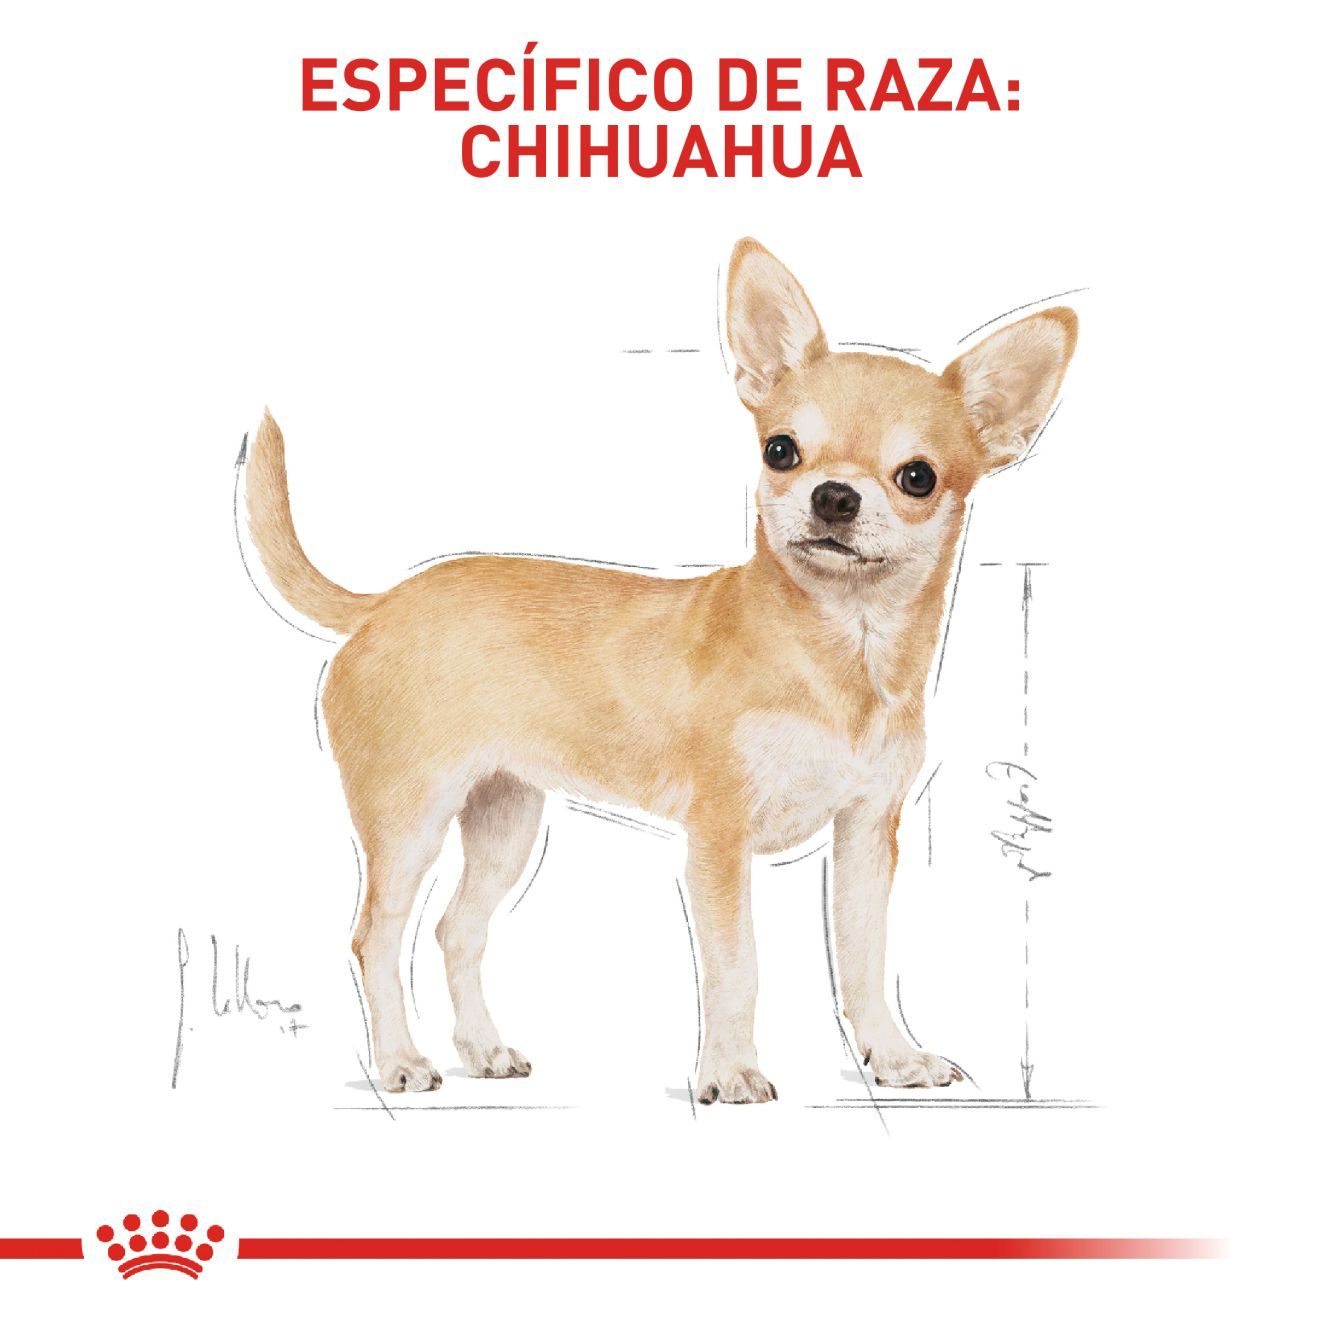 Chihuahua Adulto